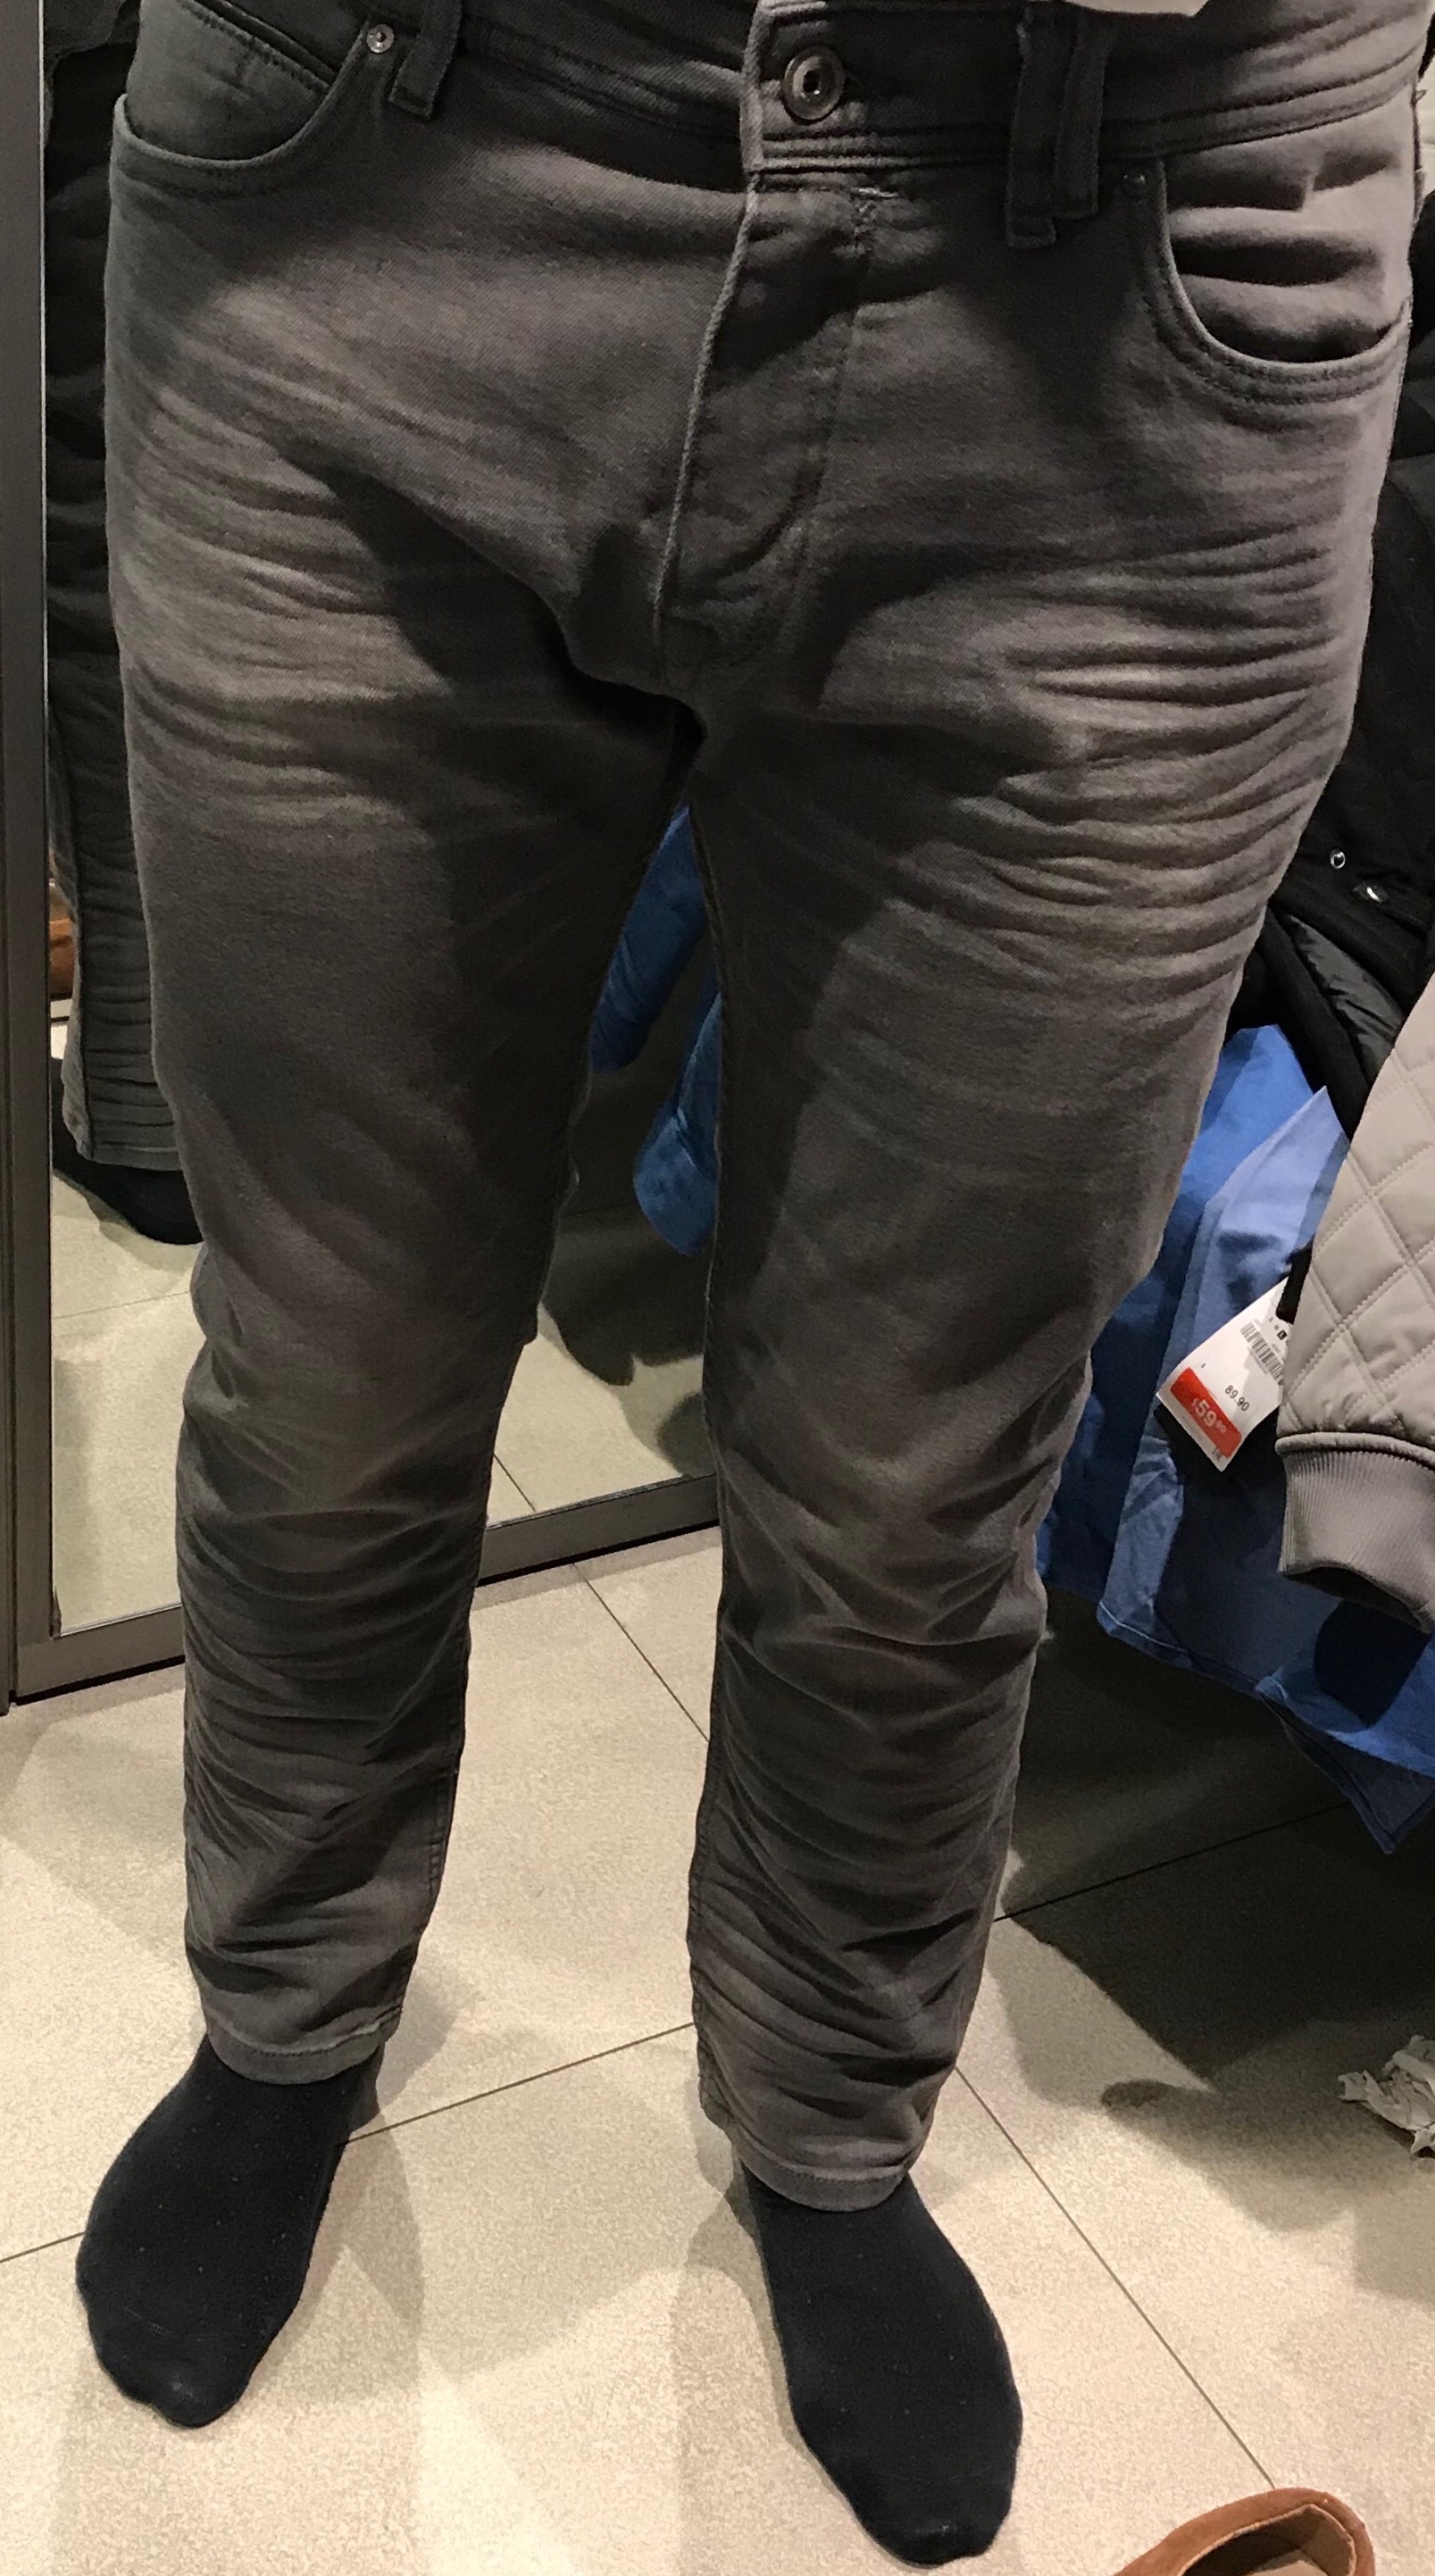 h&m jeans reddit